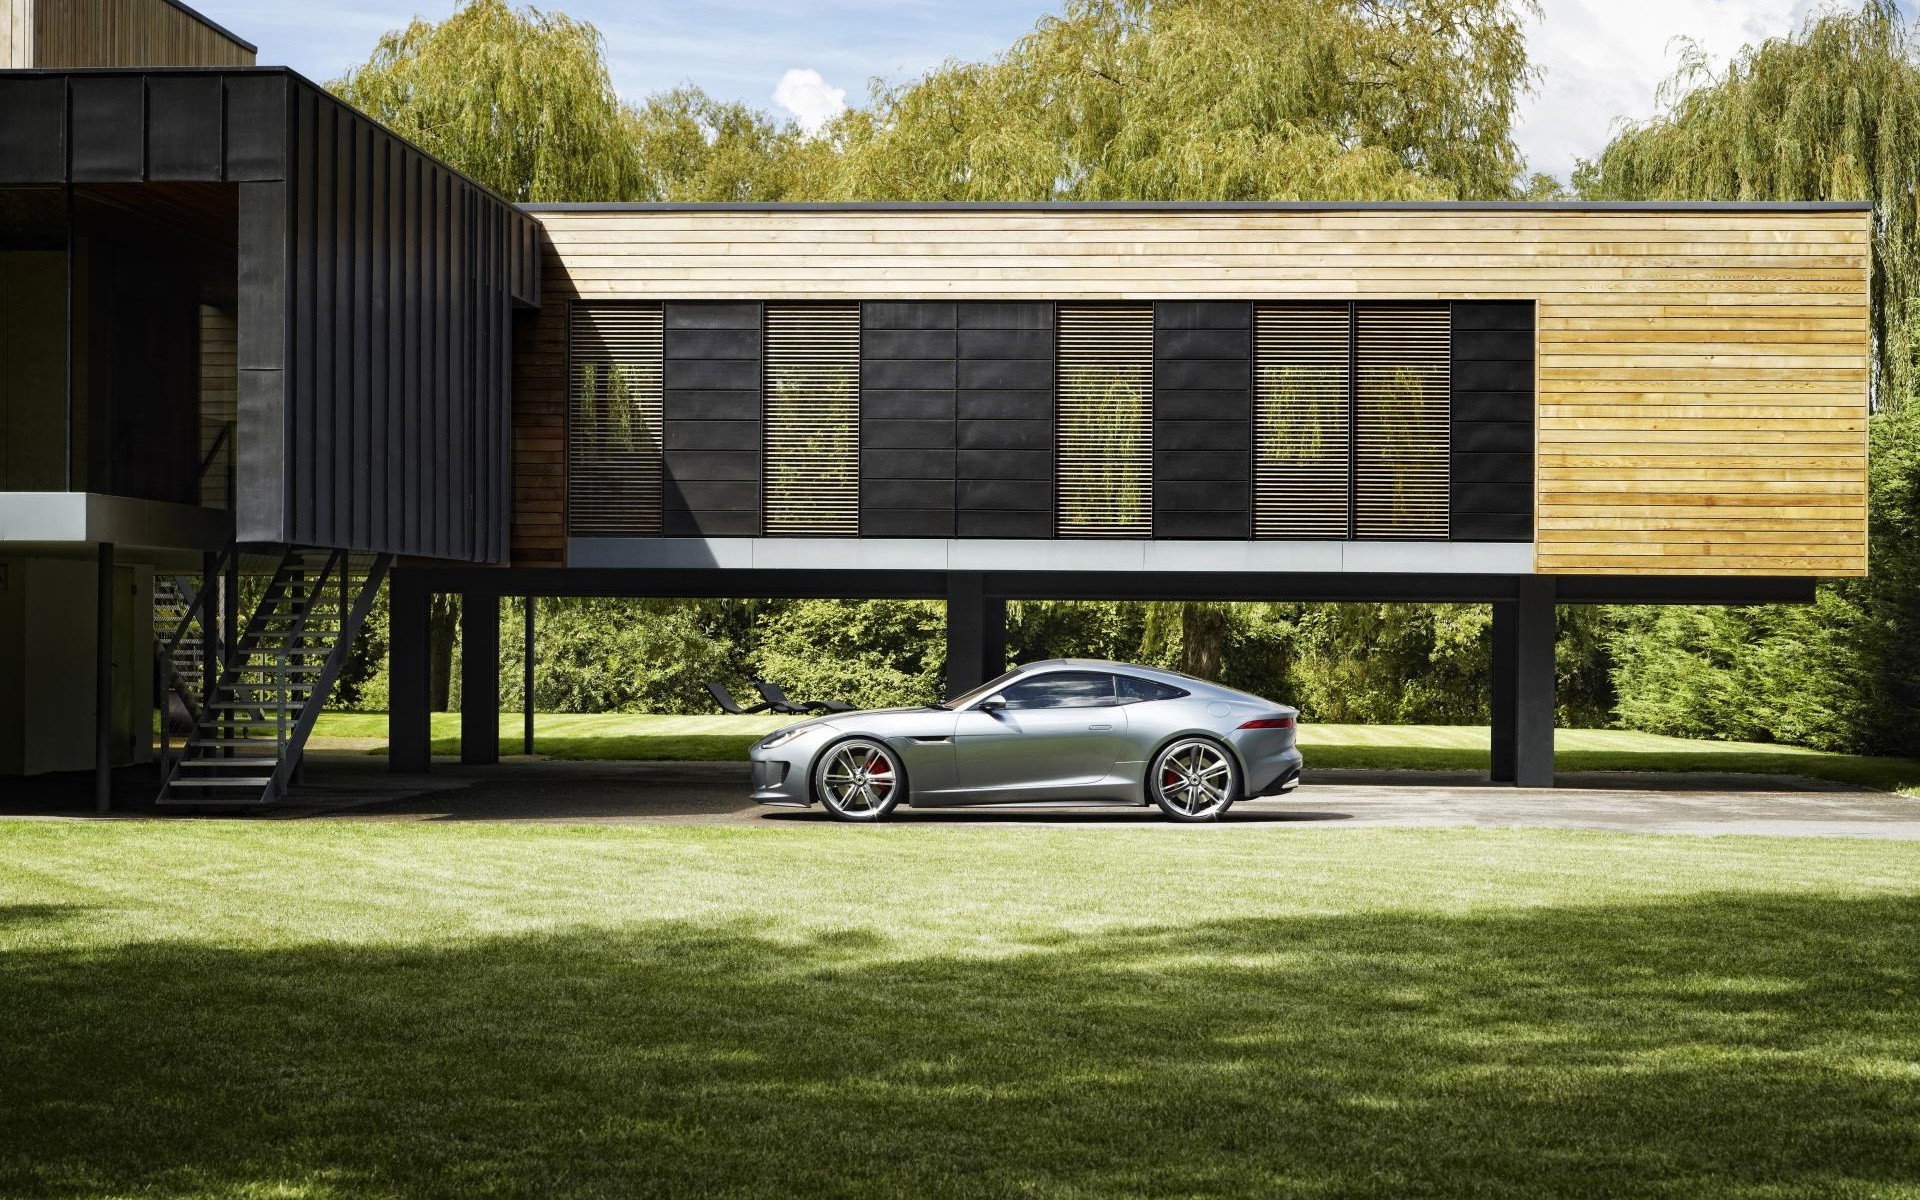 cars, Architecture, Grass, Houses, Ferrari Wallpaper